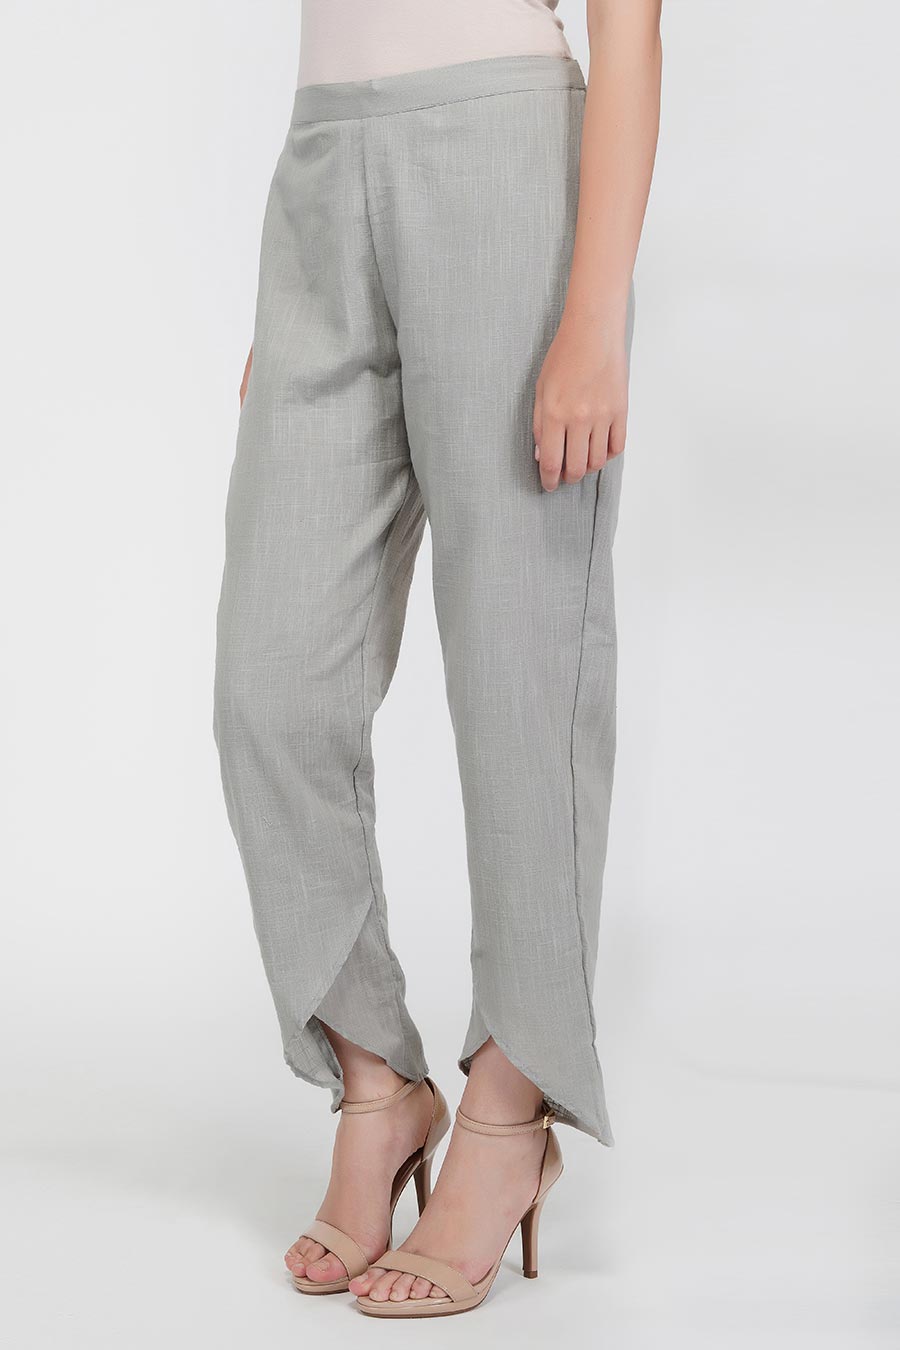 Grey Tulip Hemline Cotton Pants